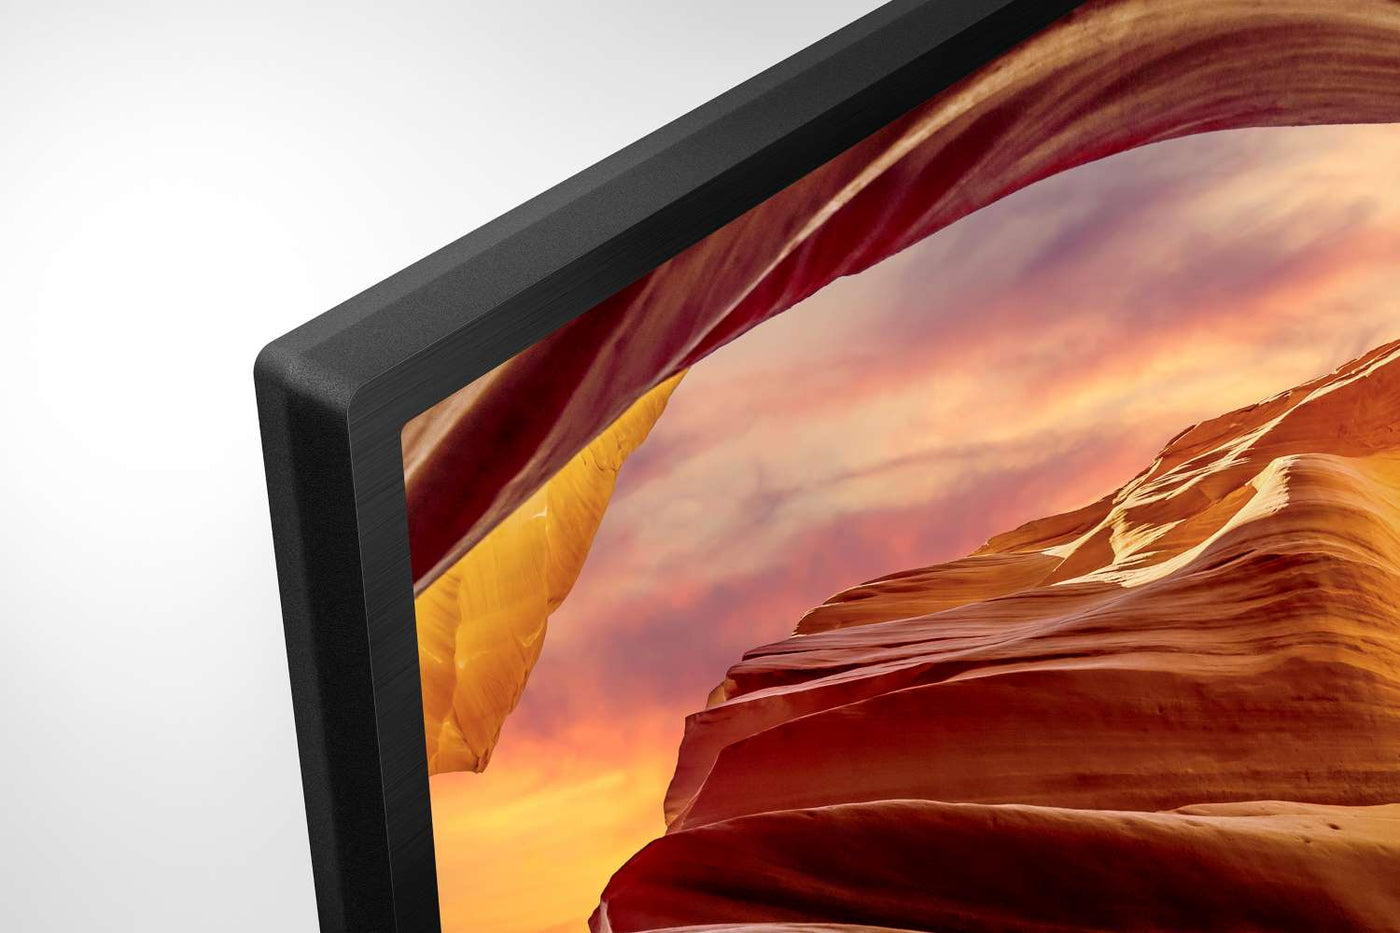 SONY 55" X77L 4K HDR LED TV Google TV - KD55X77L